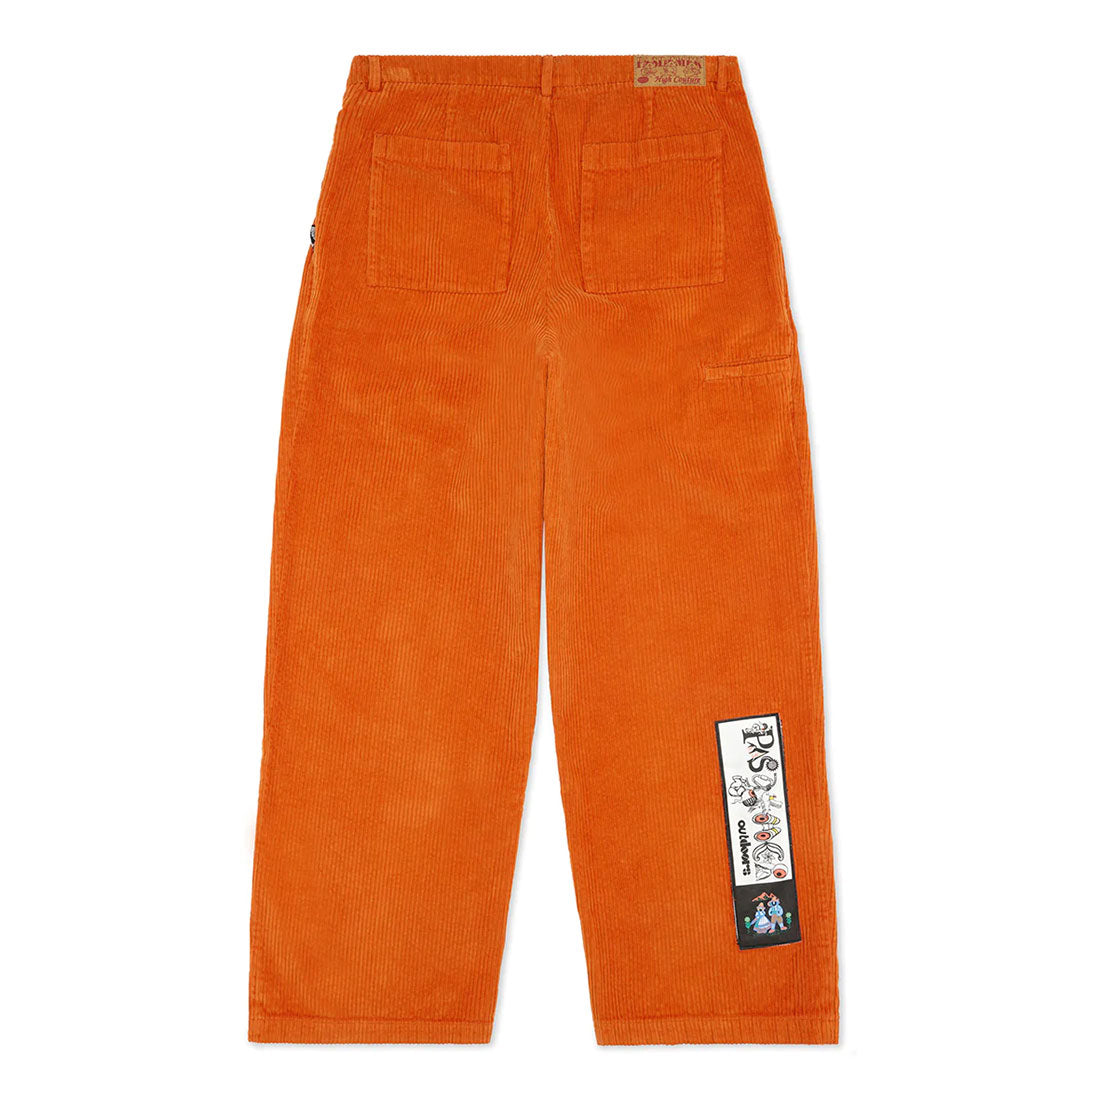 Pantaloni in velluto Pas De mer - Outdoors pants -Arancione